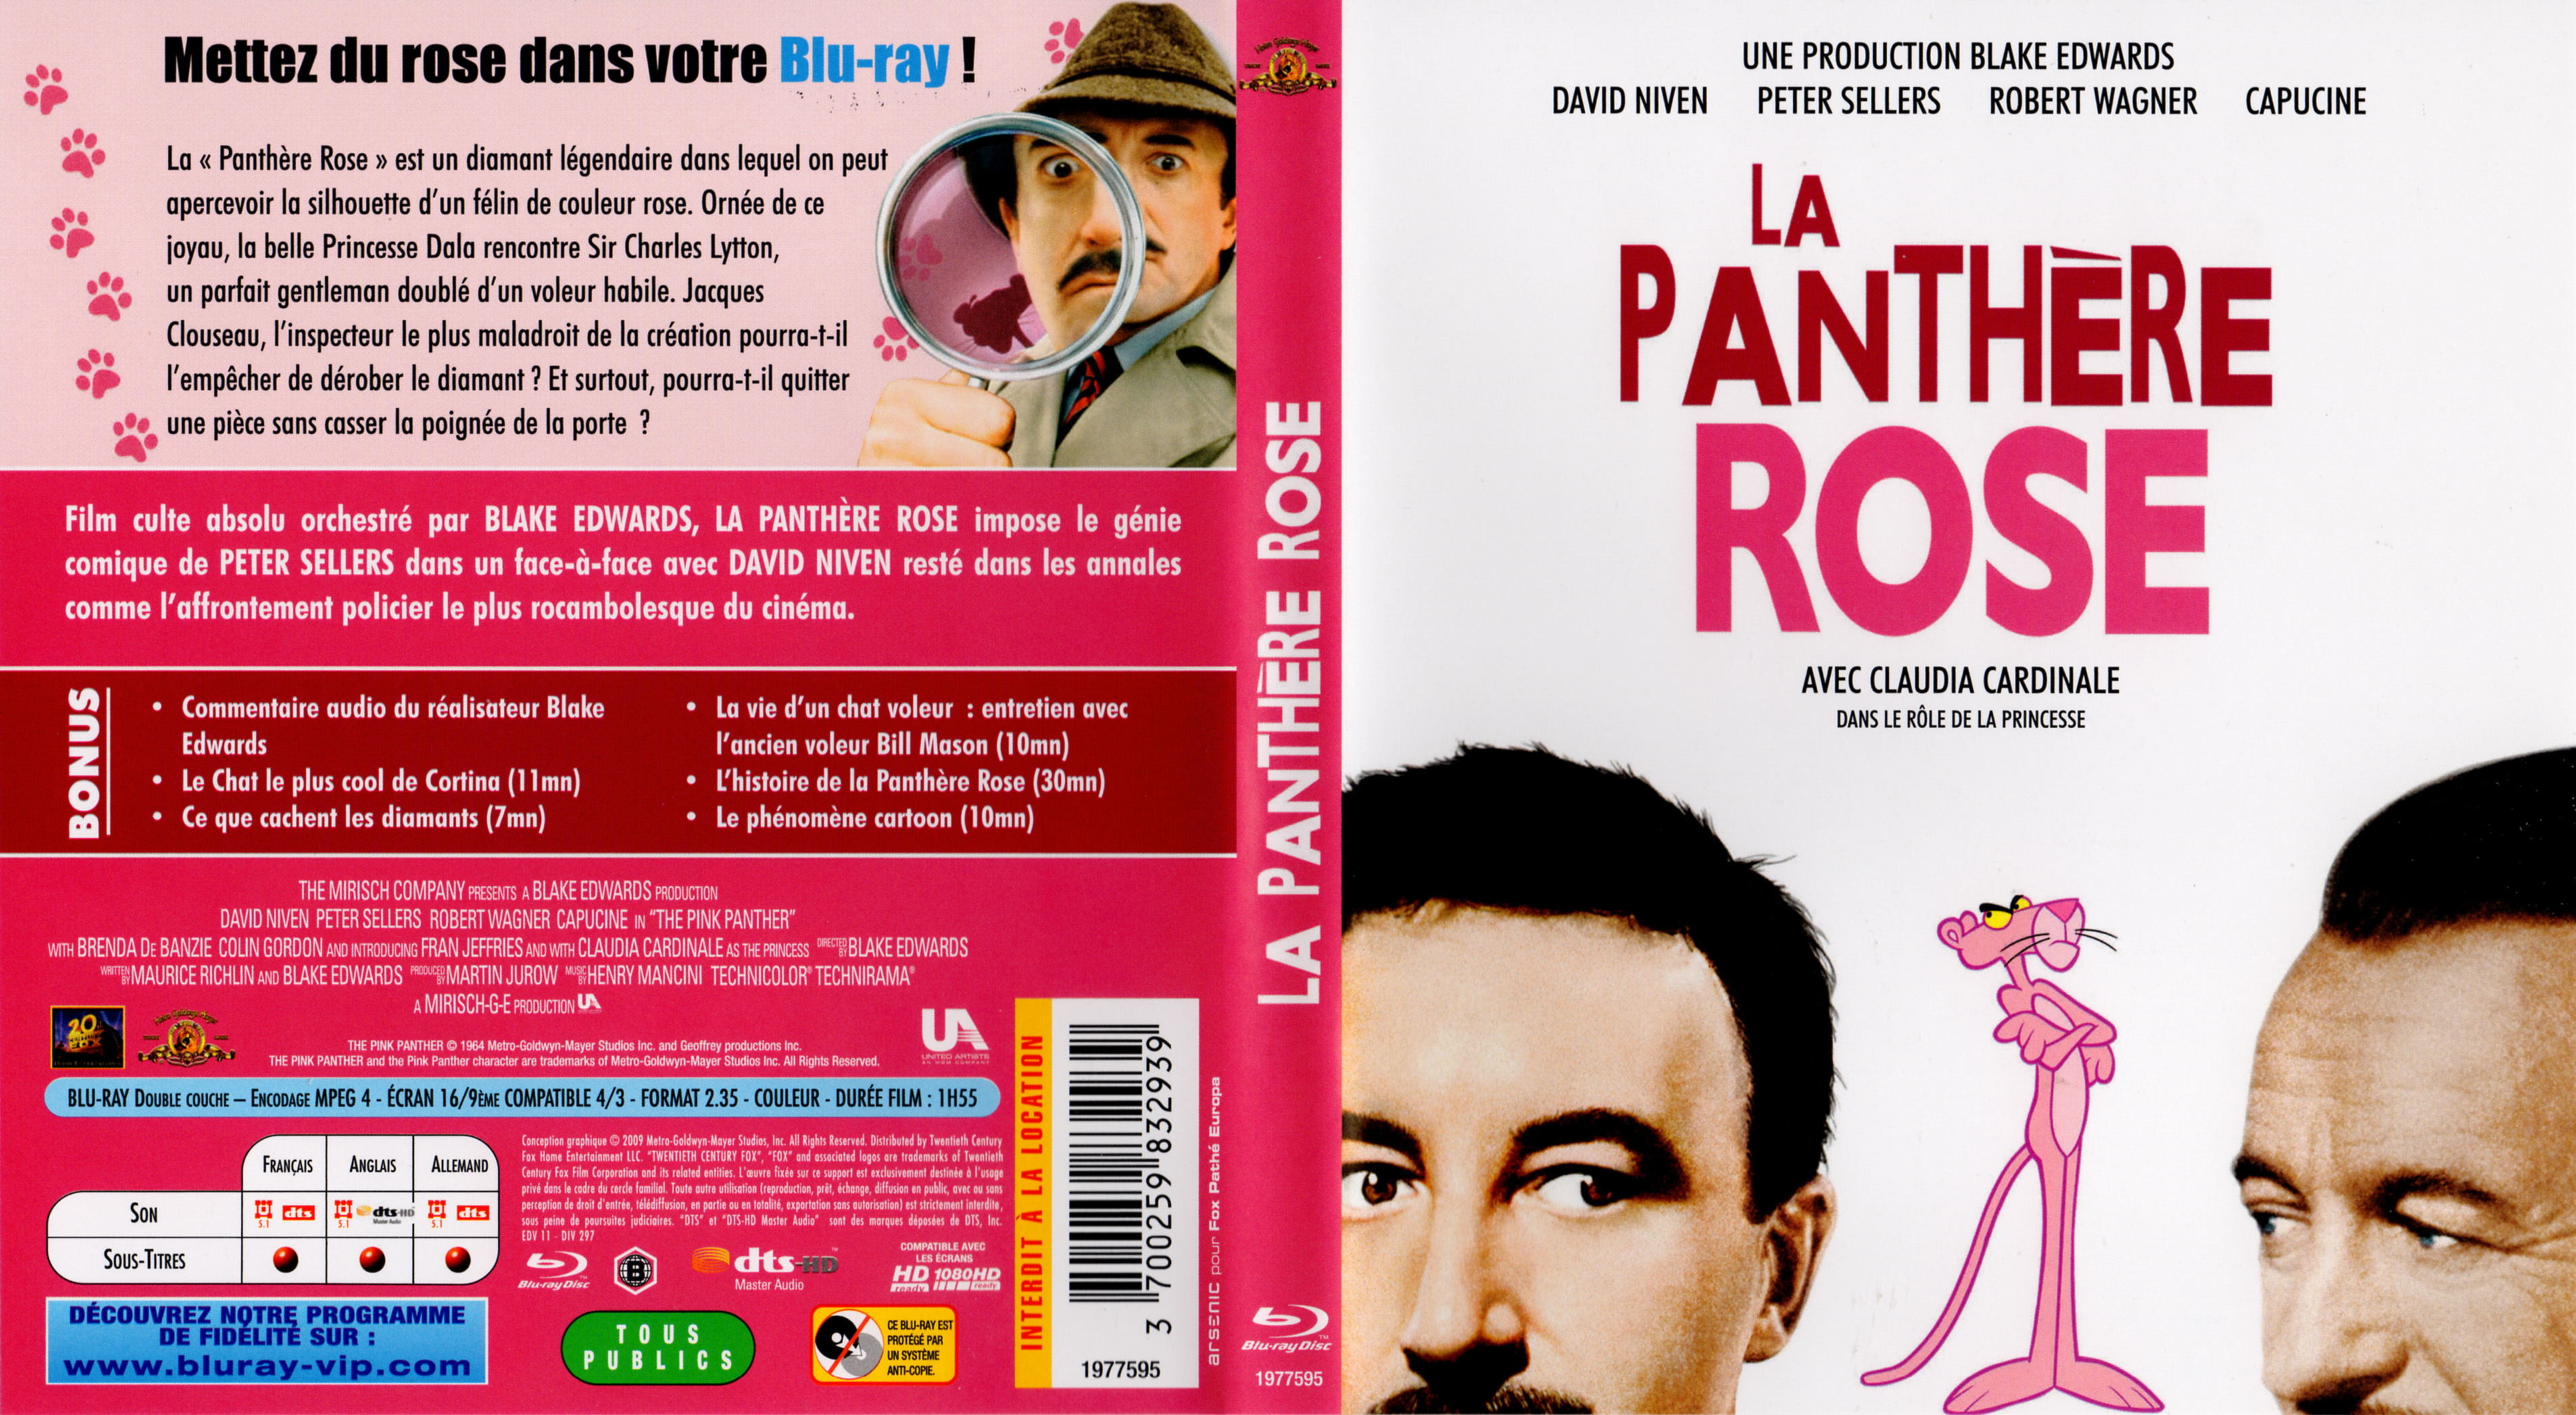 Jaquette DVD La panthre rose (BLU-RAY)